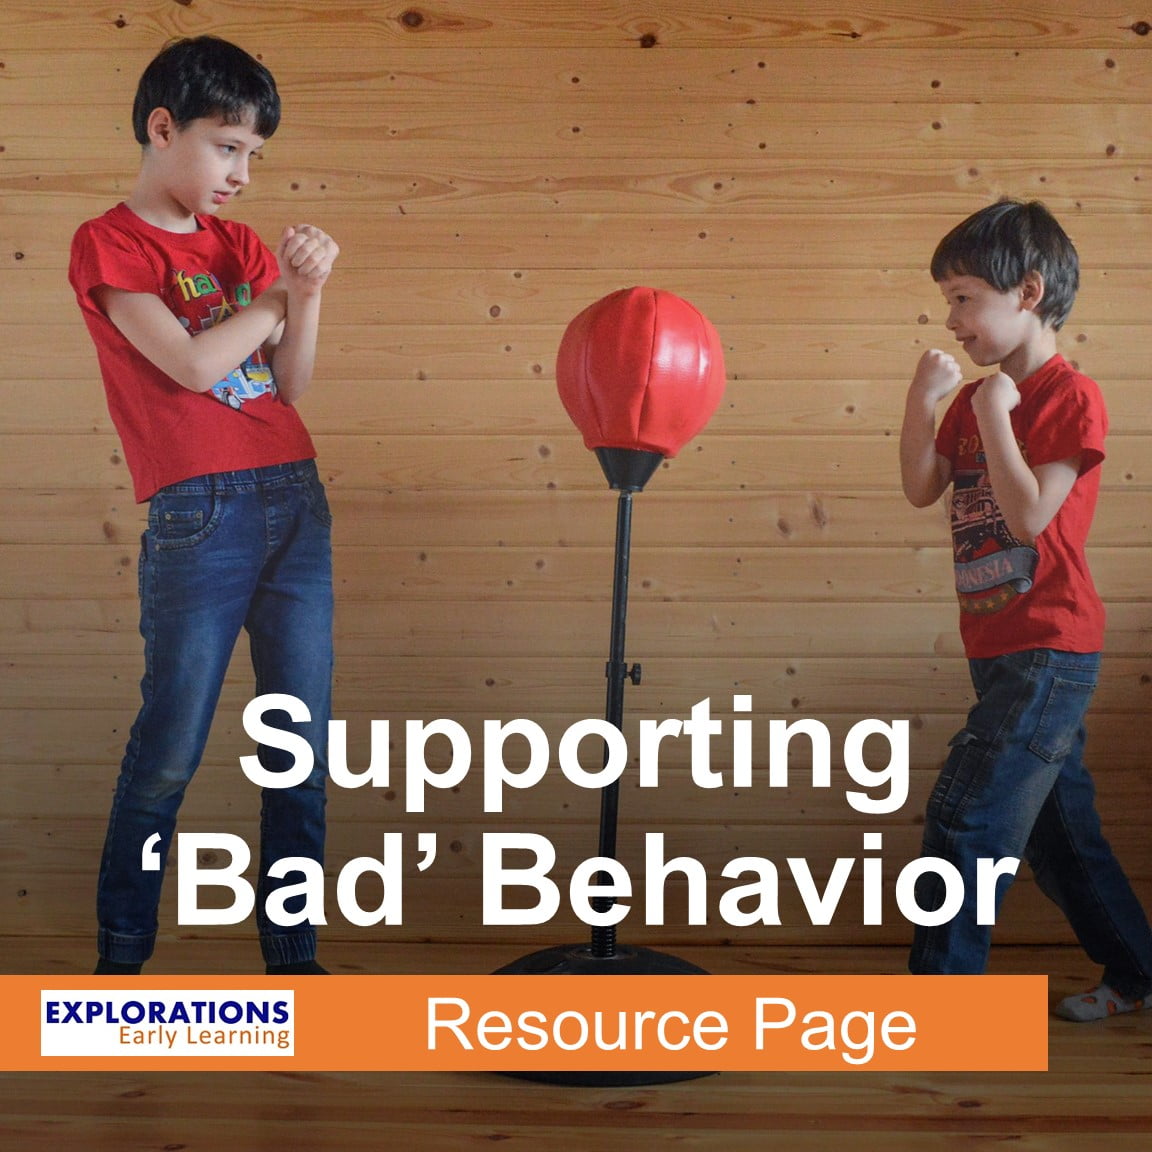 Supporting Bad Behavior